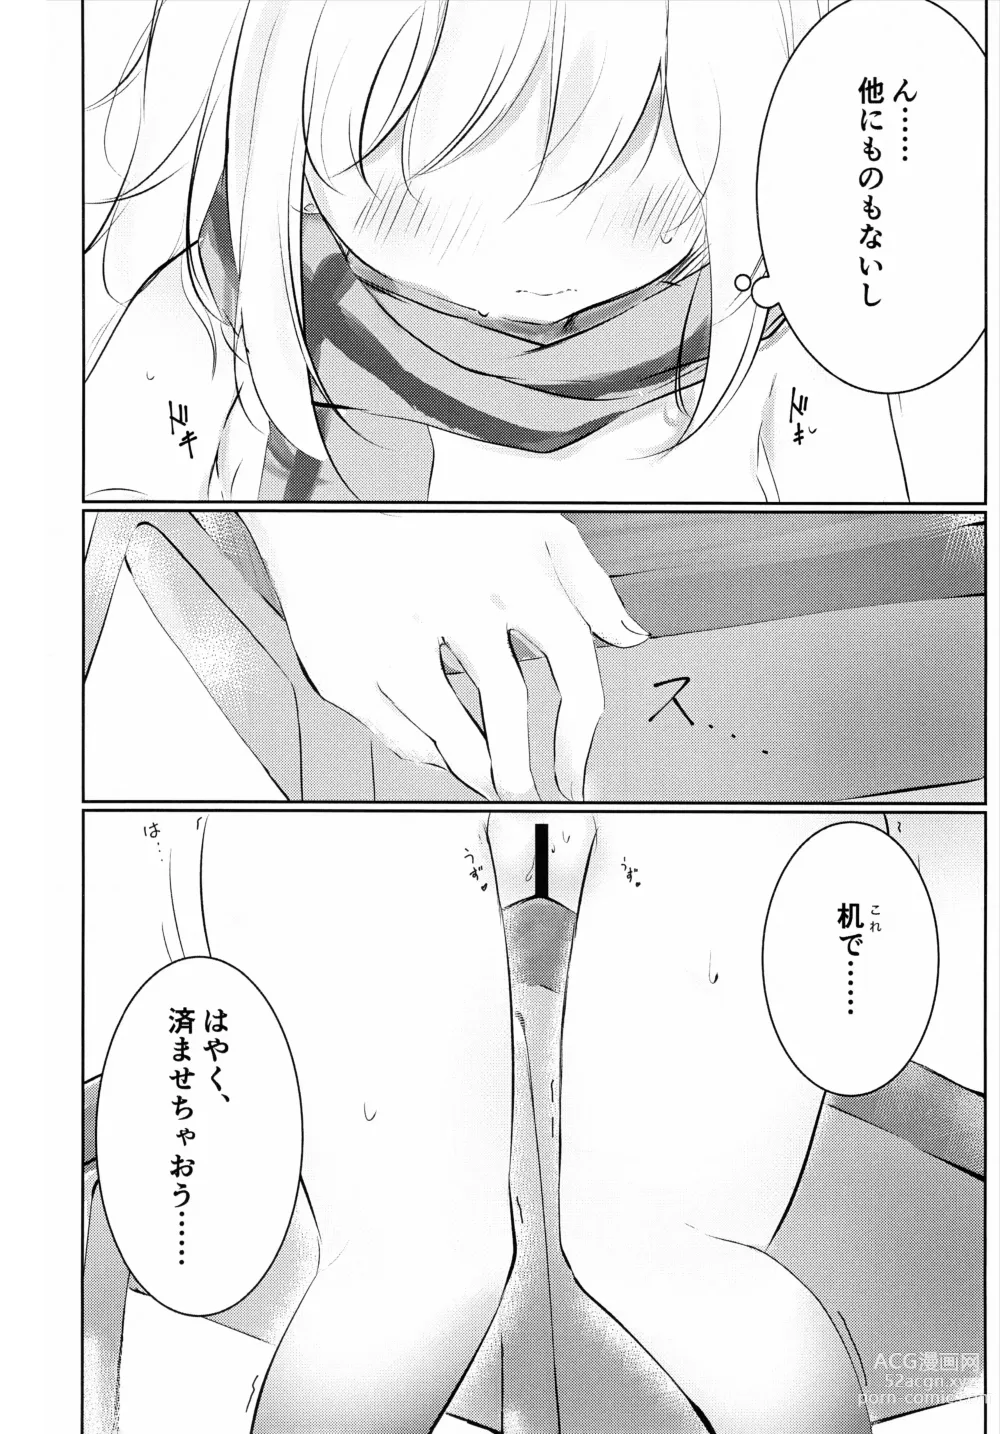 Page 7 of doujinshi Hakusyoku Aisei